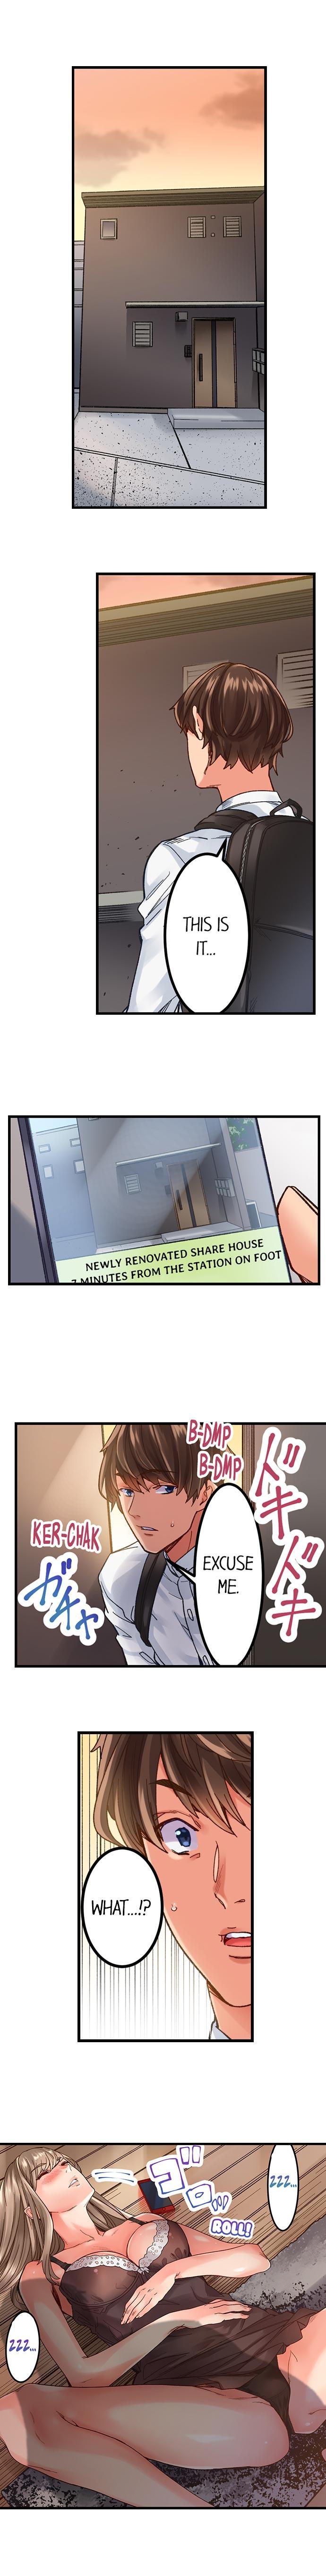 Forbidden The Share House’s Secret Rule Sucks - Picture 3